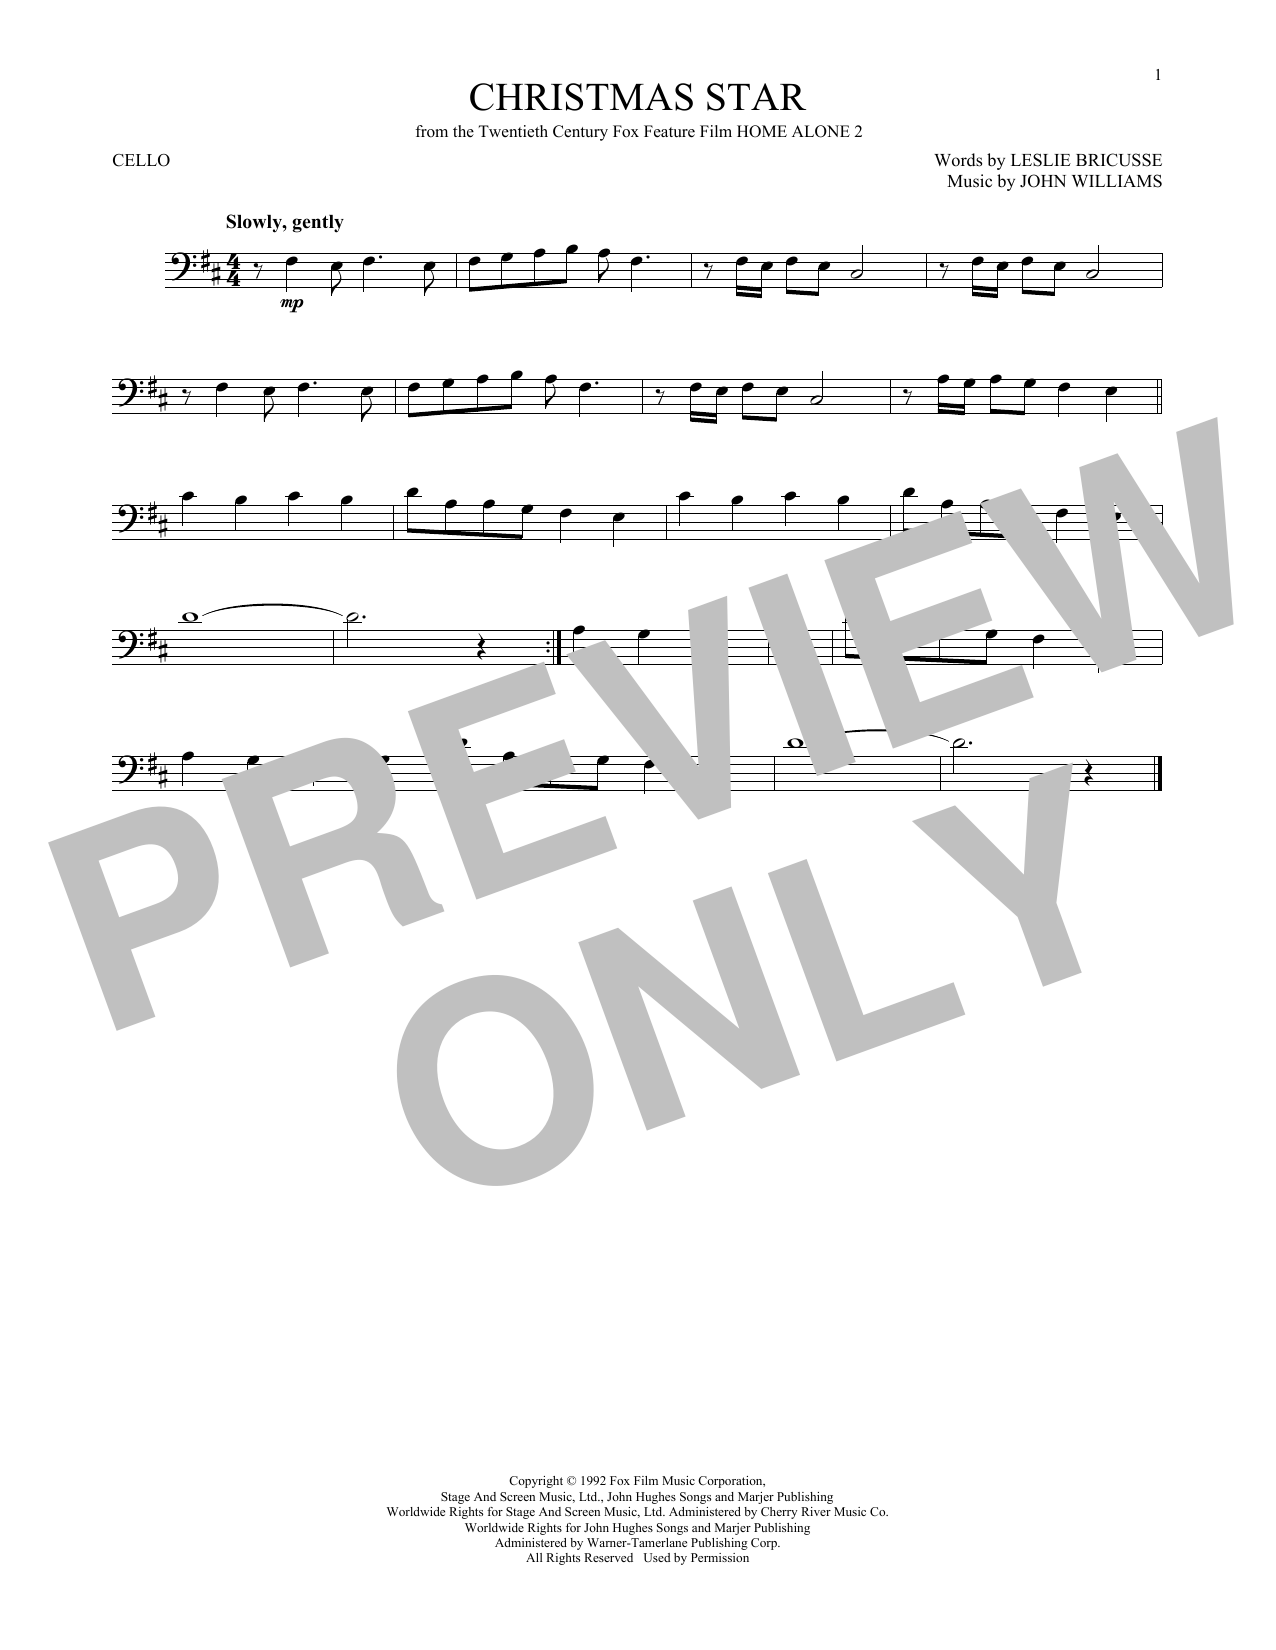 John Williams Christmas Star Sheet Music Notes & Chords for Violin - Download or Print PDF